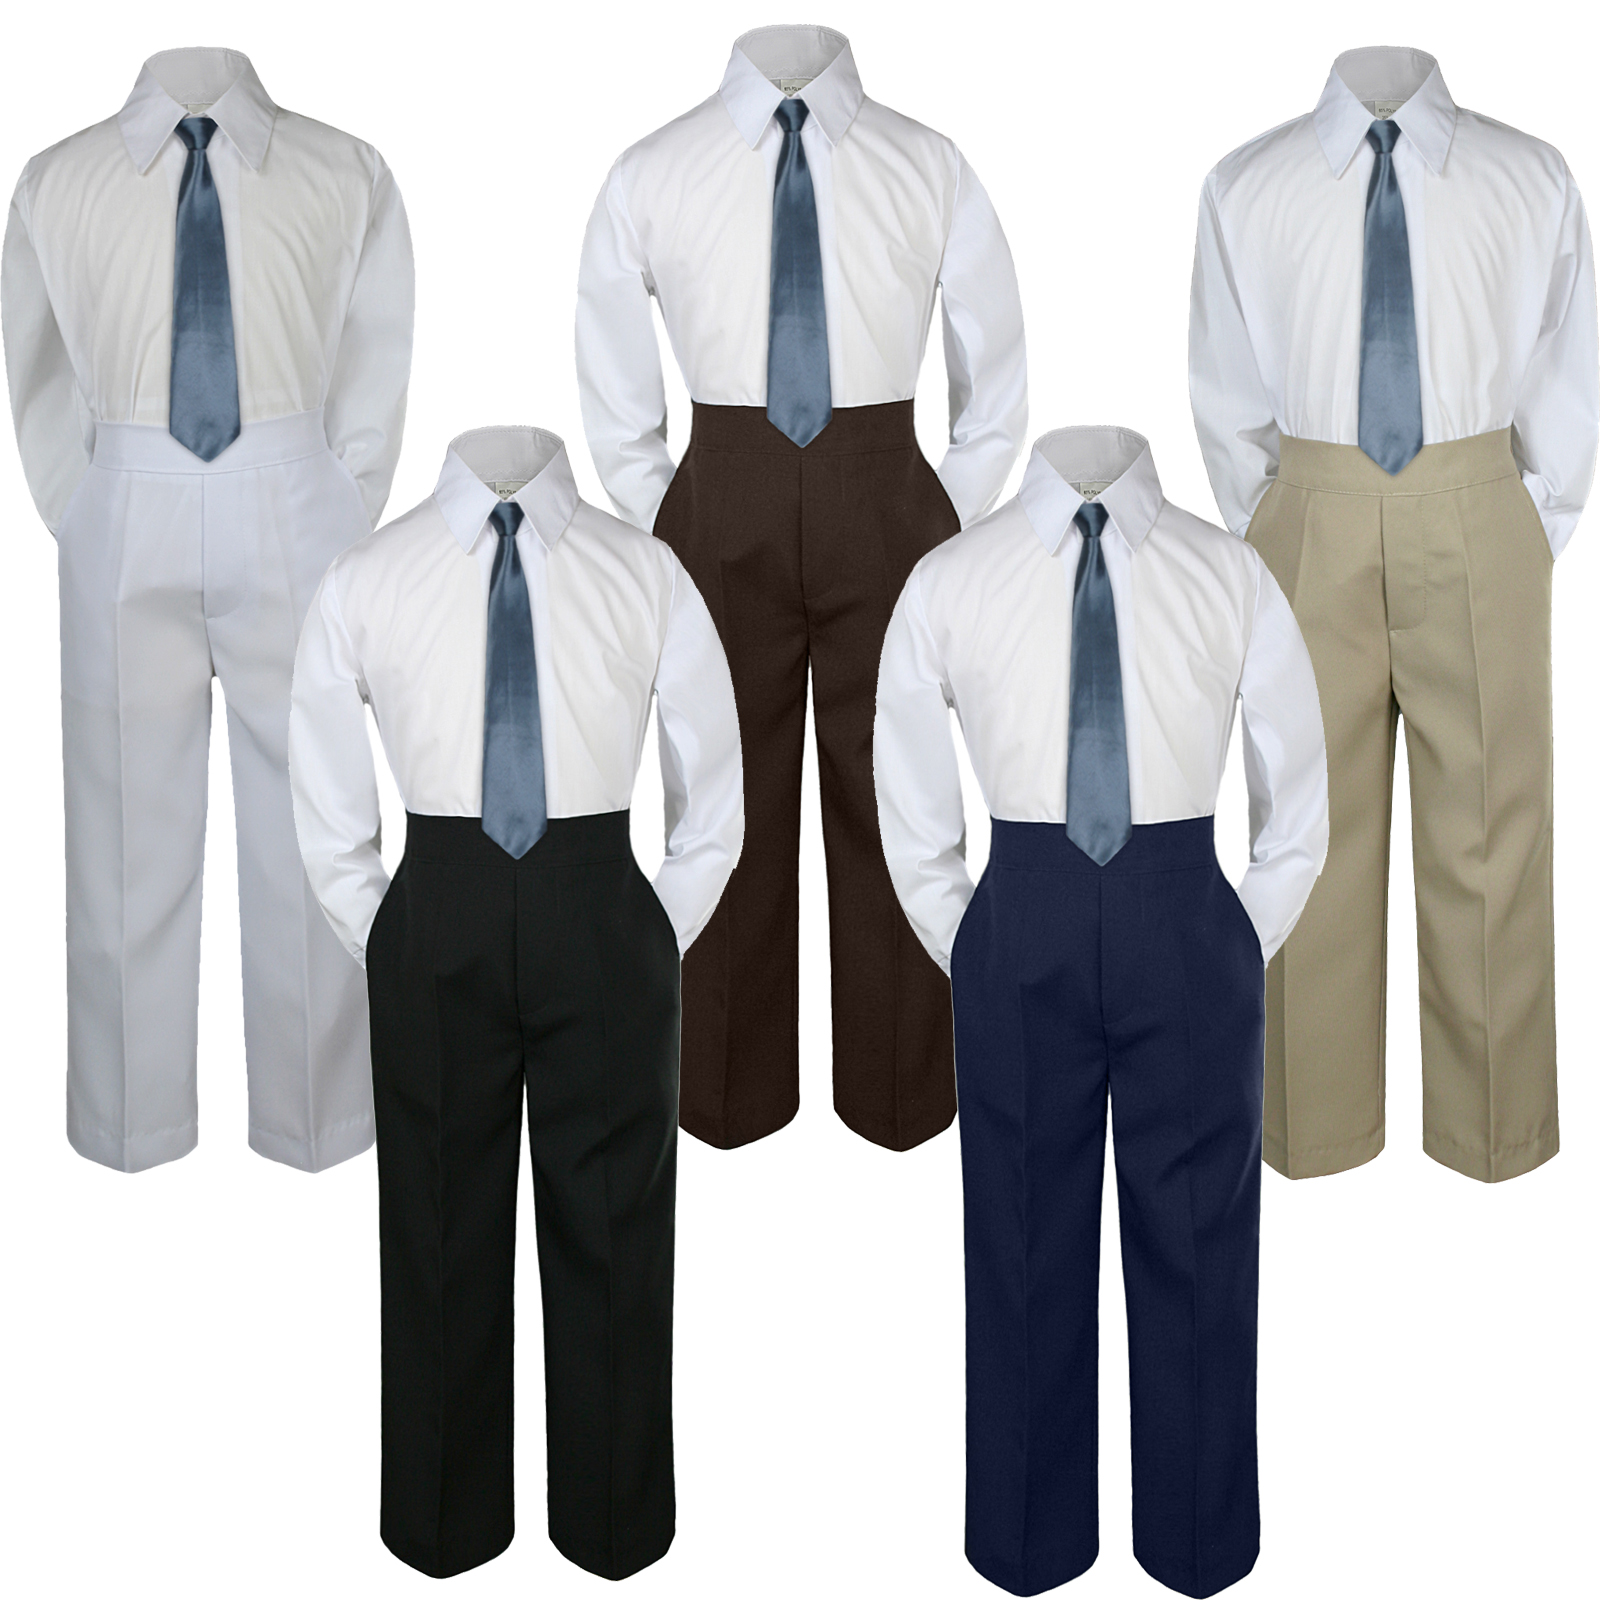 Leadertux 3pc 5 6 7 Kid Child Children Boys Shirt Pants Suits Tuxedo Wedding Outfits Dark Gray Charcoal Pewter Necktie Set